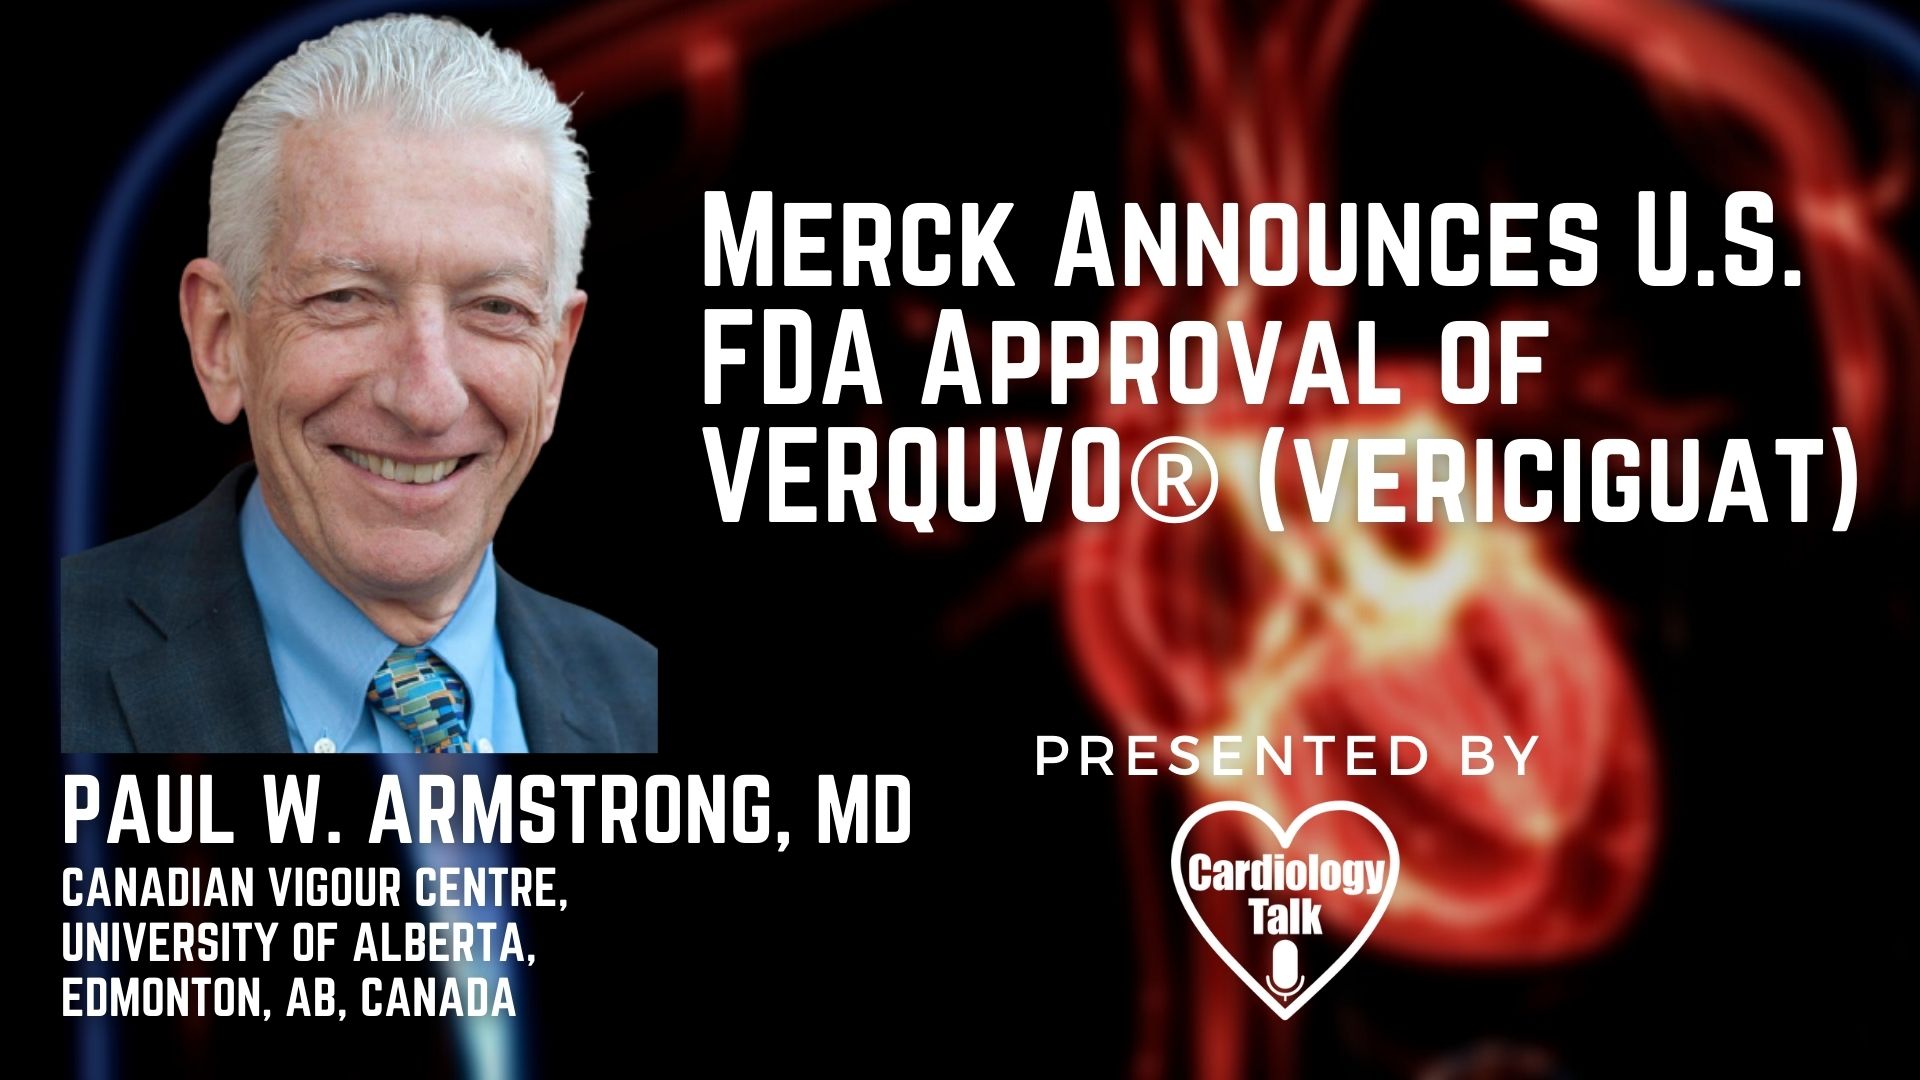 Paul W. Armstrong, MD @CVC_UAlberta @UAlberta @MerkCanada @Merk #Cardiovascular #HeartFailure #Research U.S. FDA Approval of VERQUVO